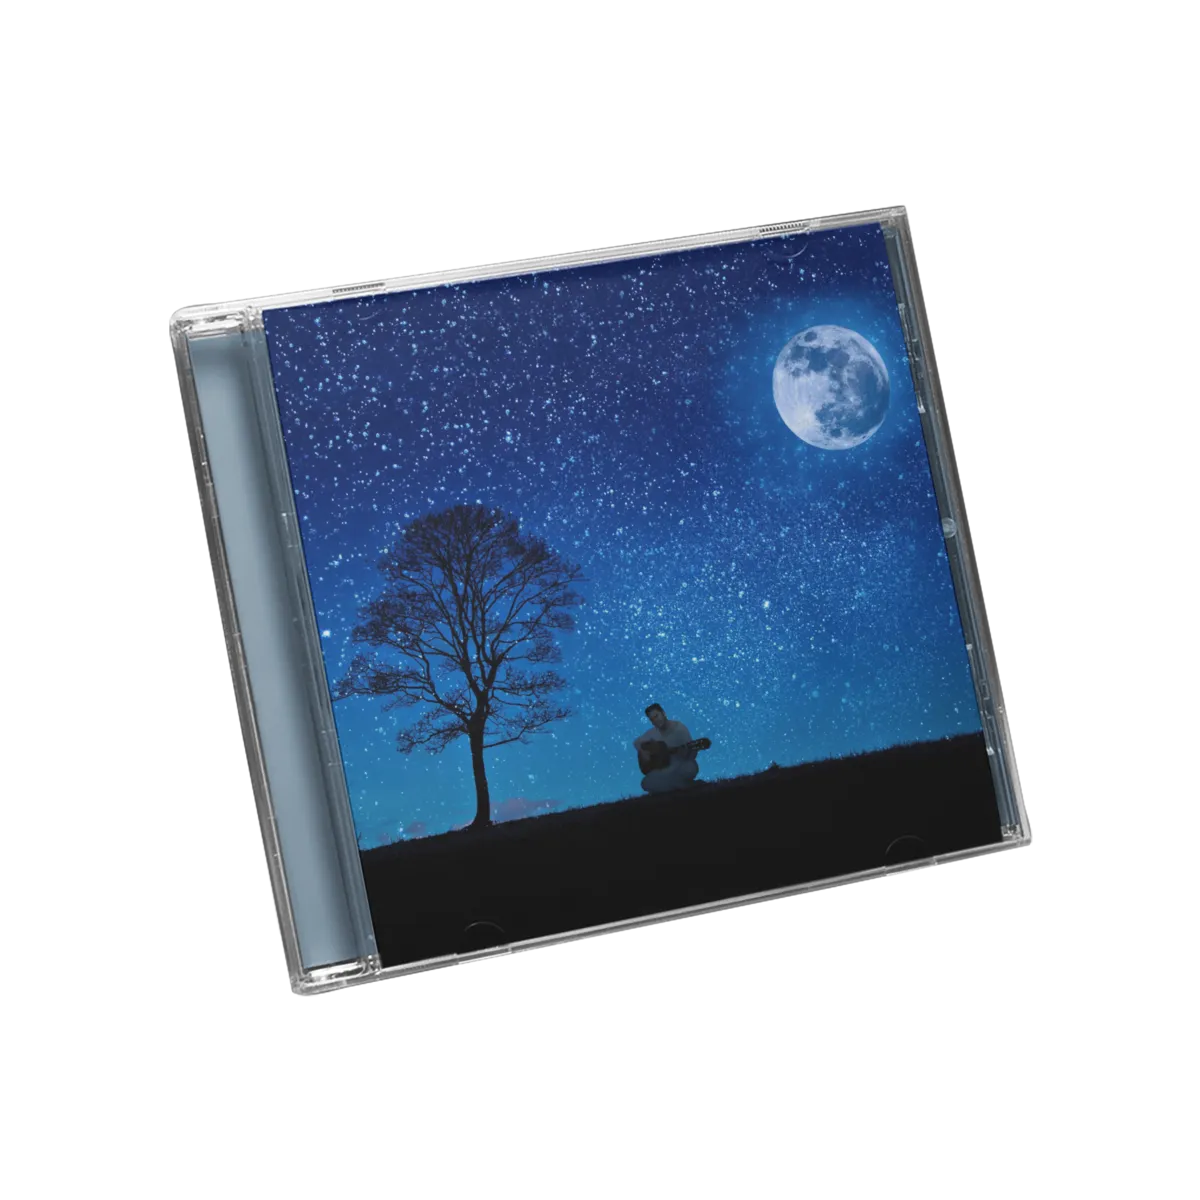 Heartstrings in Moonlight CD PLUS Download Special Discount